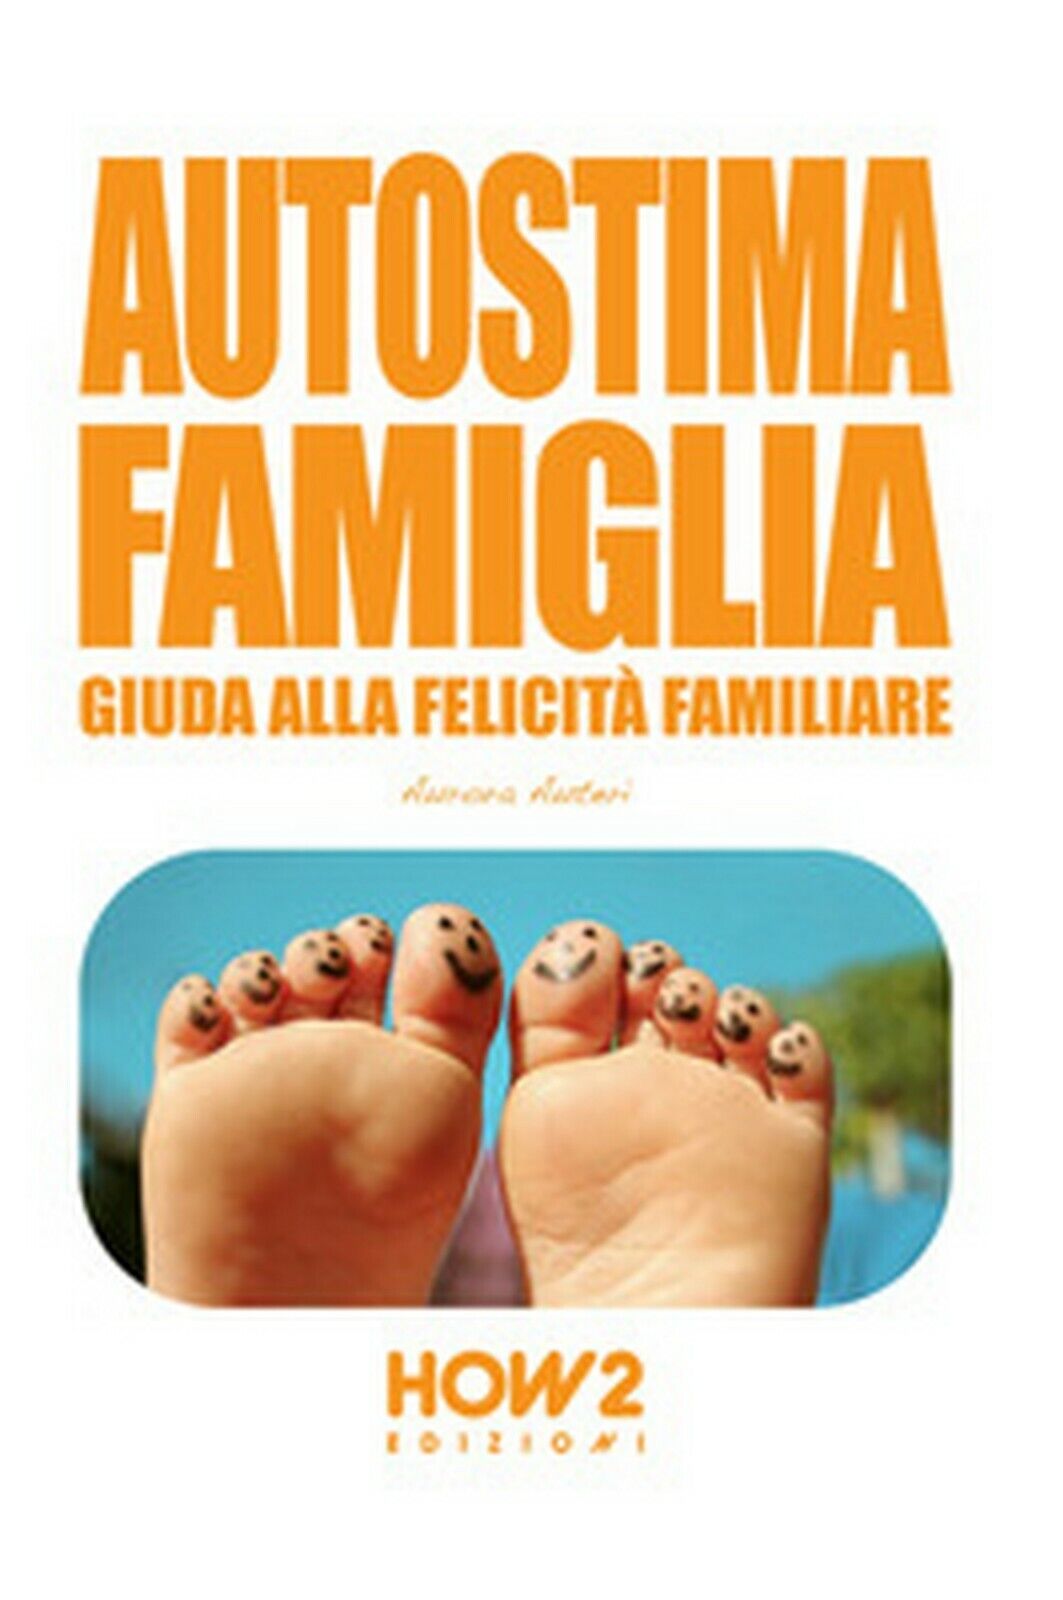 Autostima famiglia. Guida alla felicit? familiare, Aurora Auteri,  2014,  How2